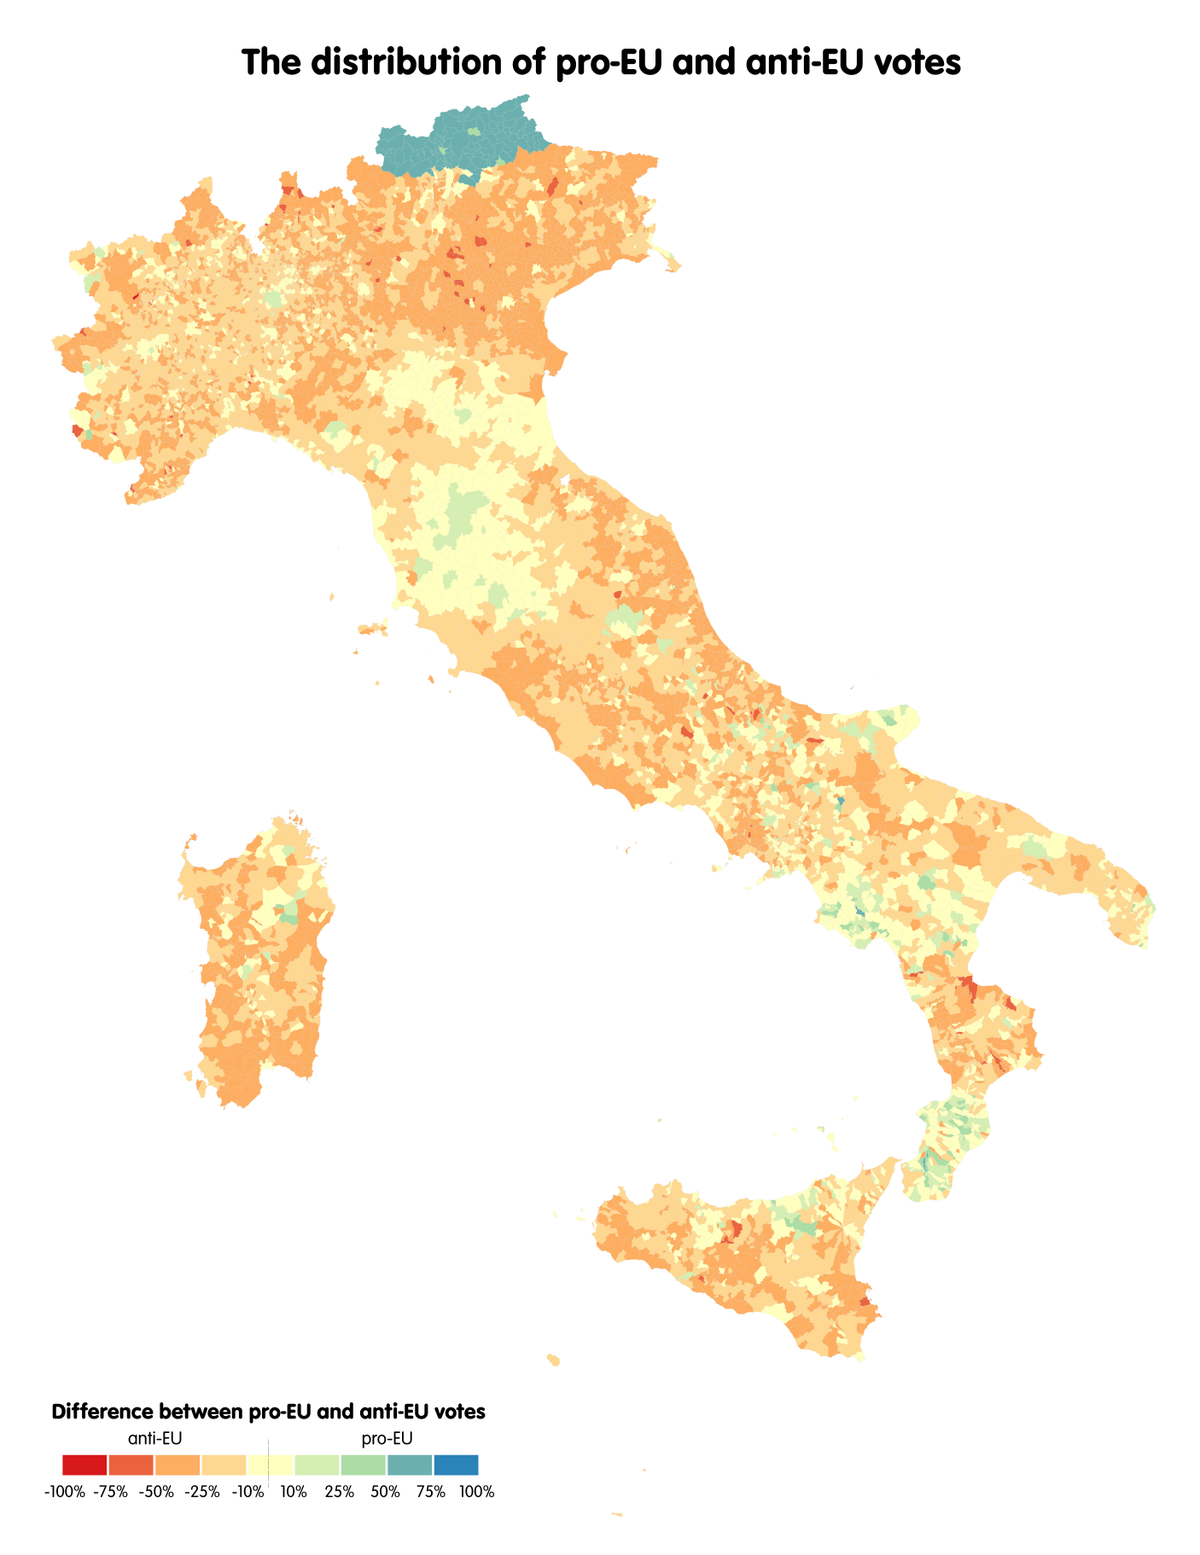 Italy - The distribution of pro-EU and anti-EU votes